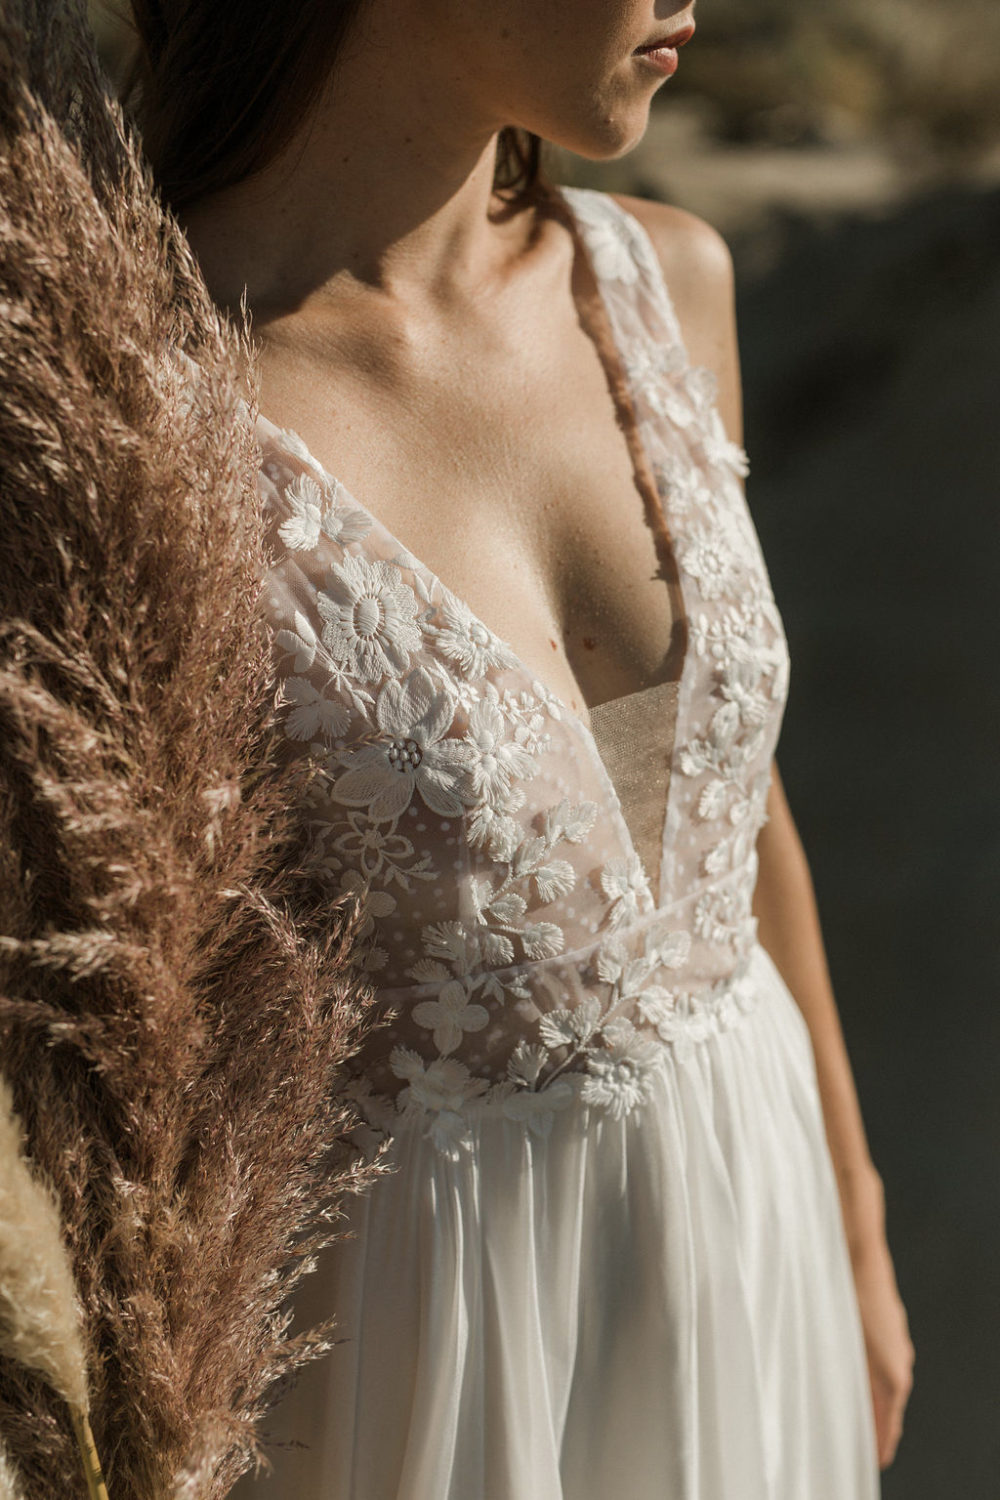 Camille Recolin Collection 2019 - Robes de Mariée - Blog Mariage Madame C